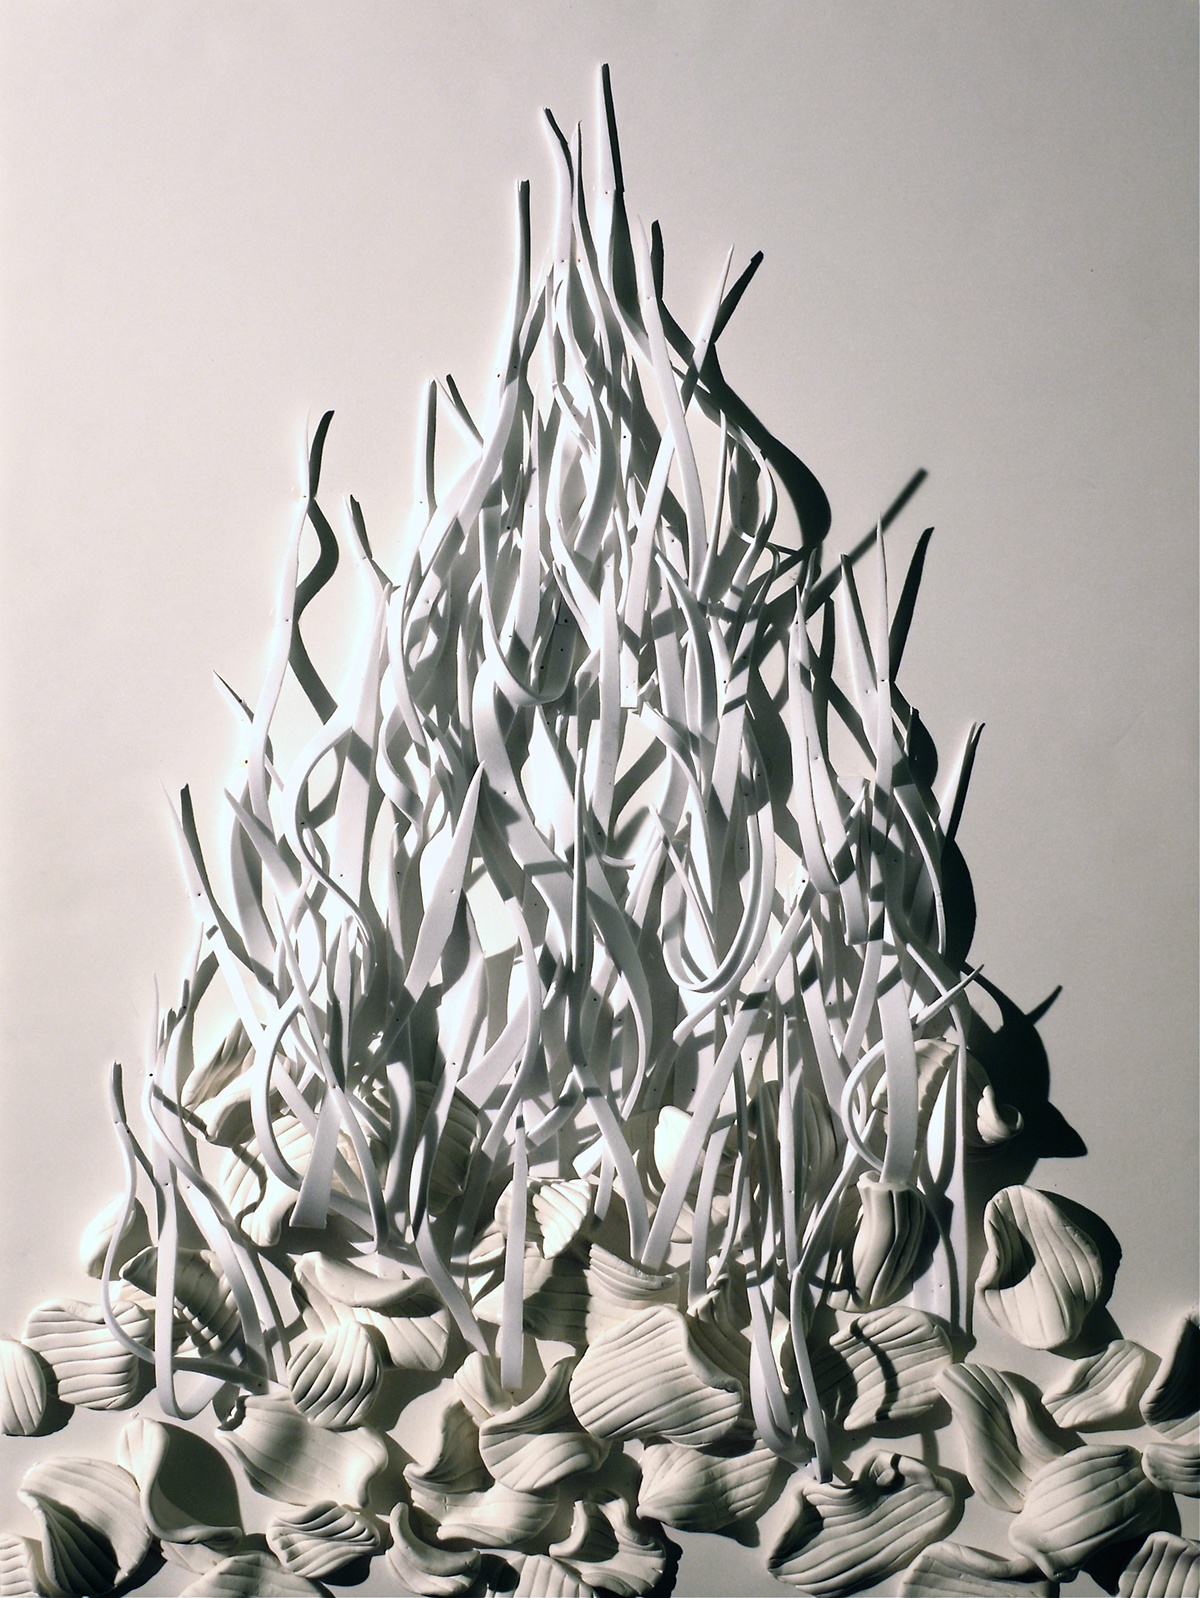 relief flame Ocean sea ripple pollution Nature organic Foam acrylic sculpture flow fire water